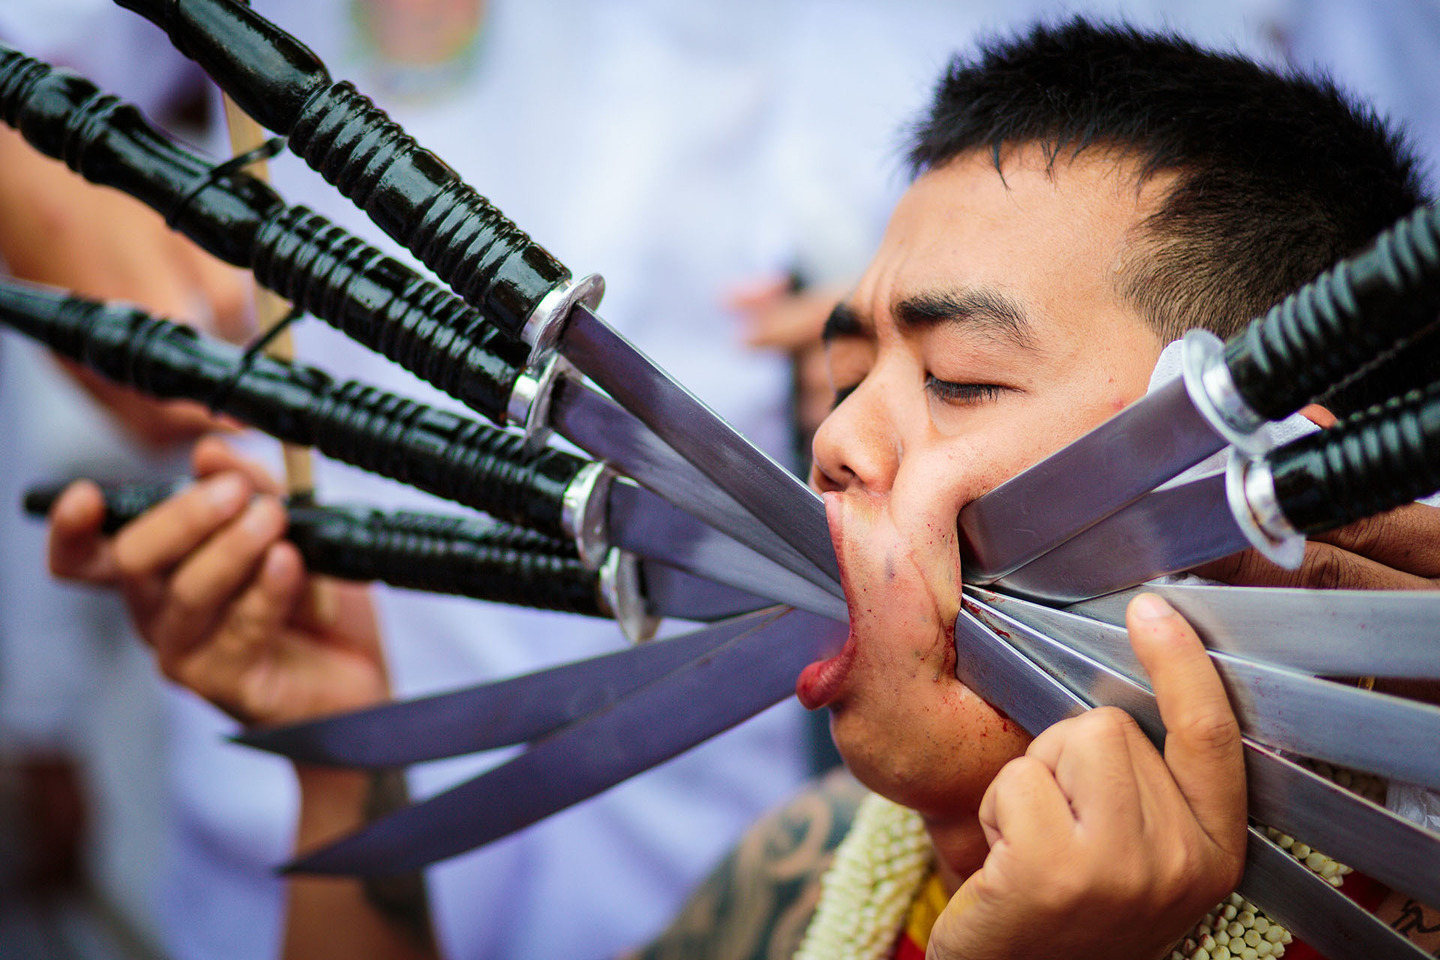 Extreme piercing performed at Phuket Vegetarian Festival parade